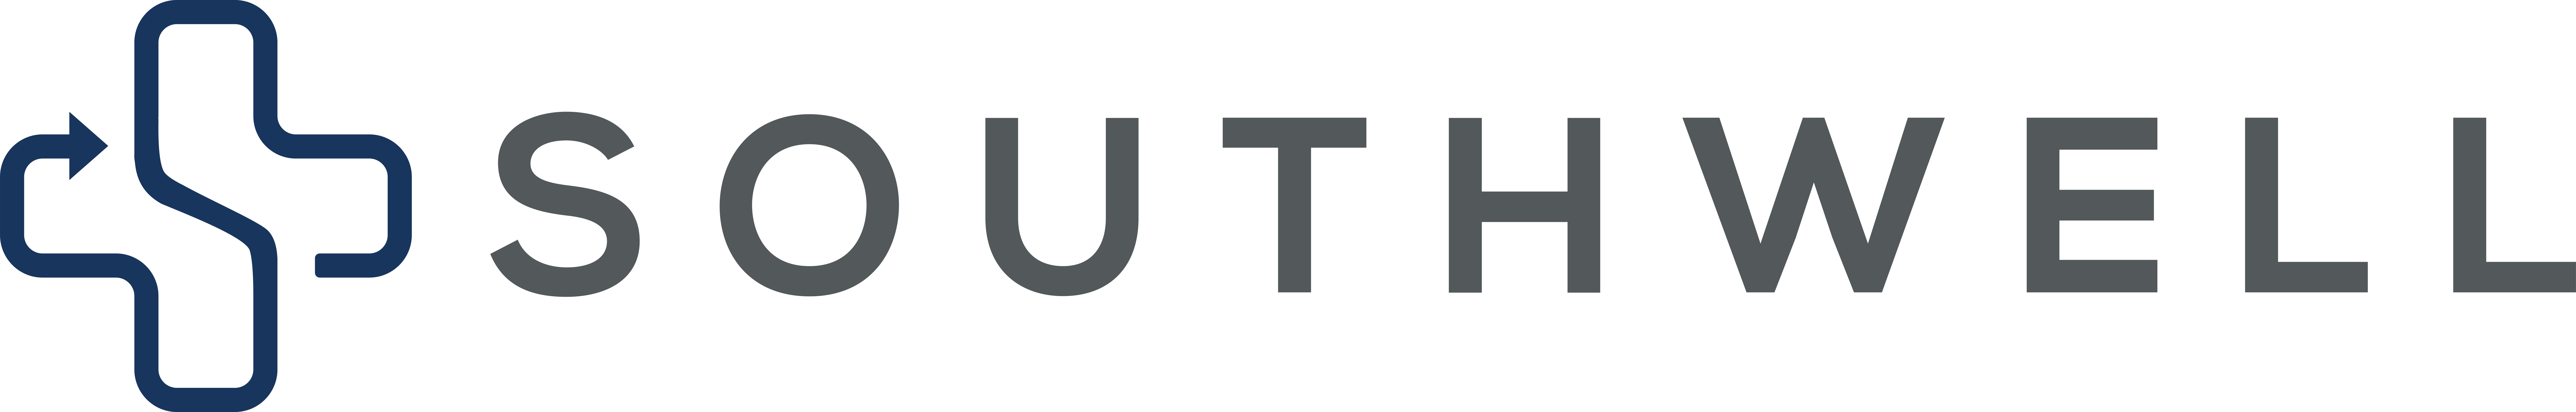 Logo image for Southwell